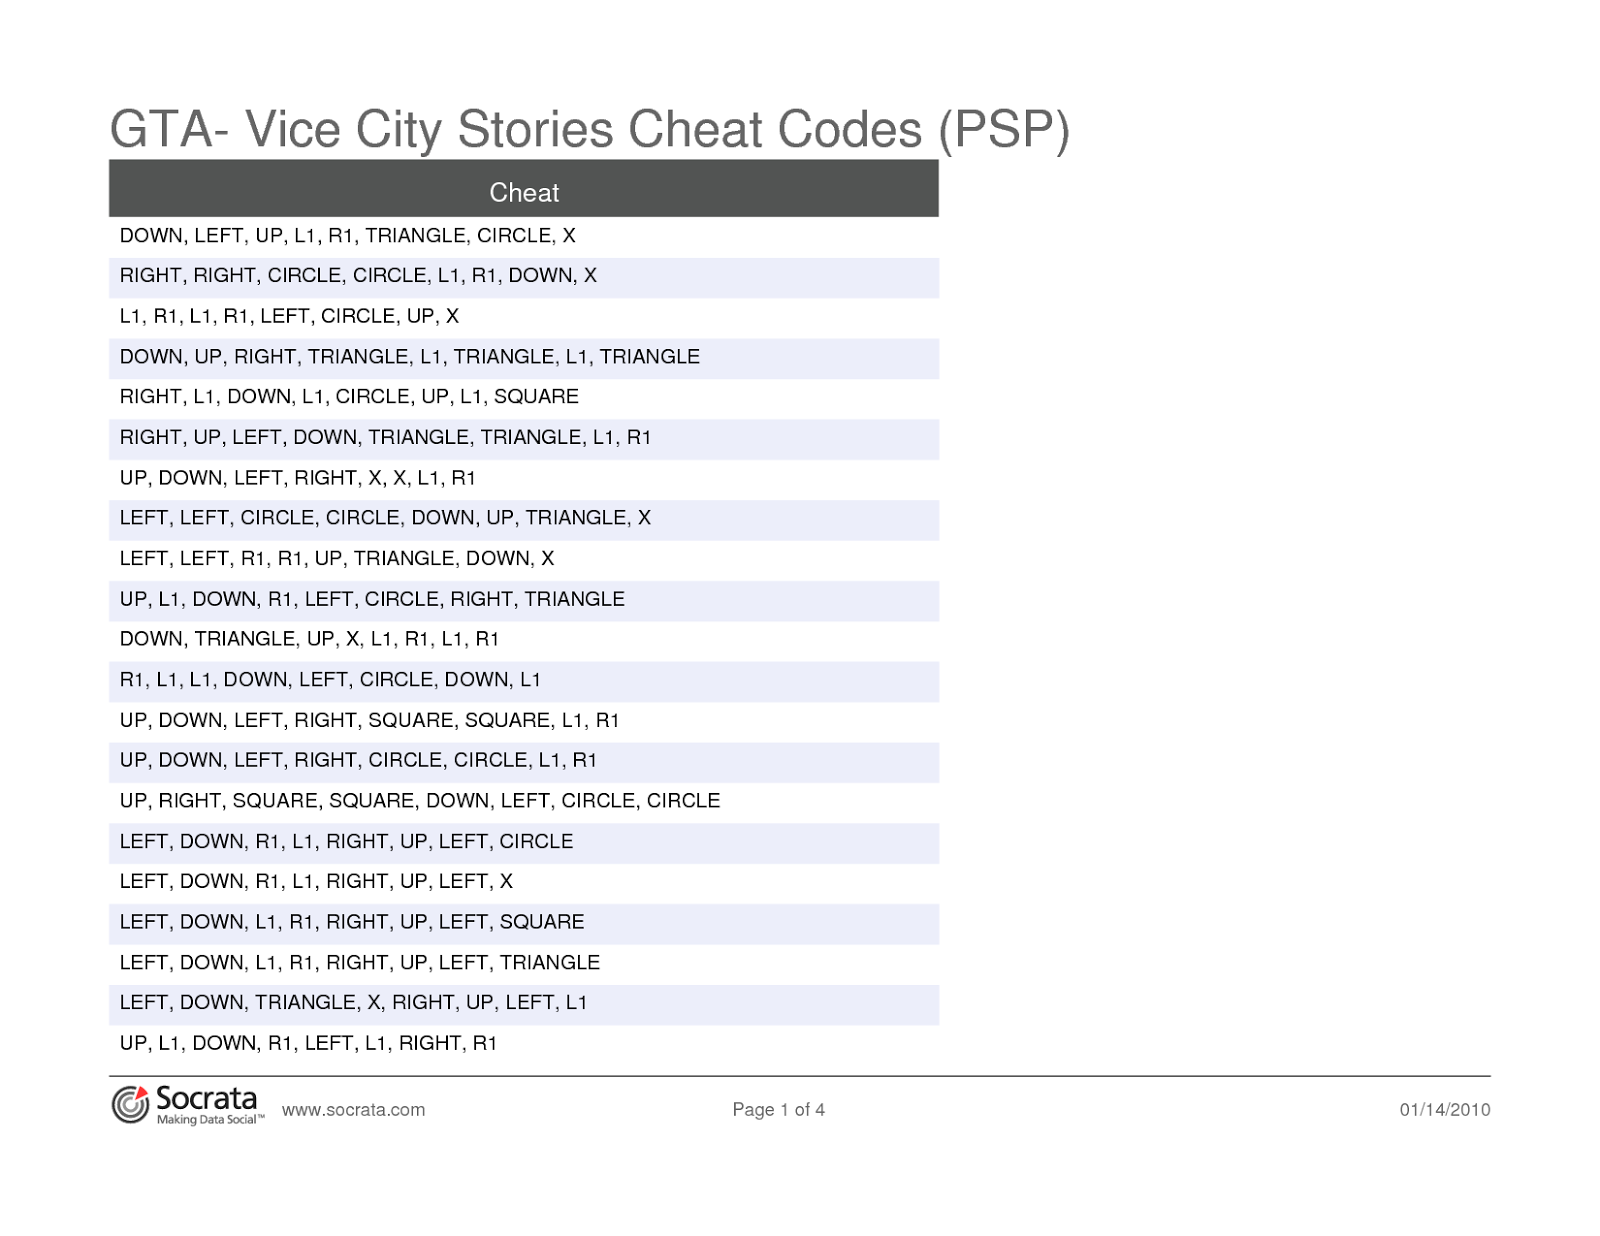 cheat codes for gta liberty city ps2